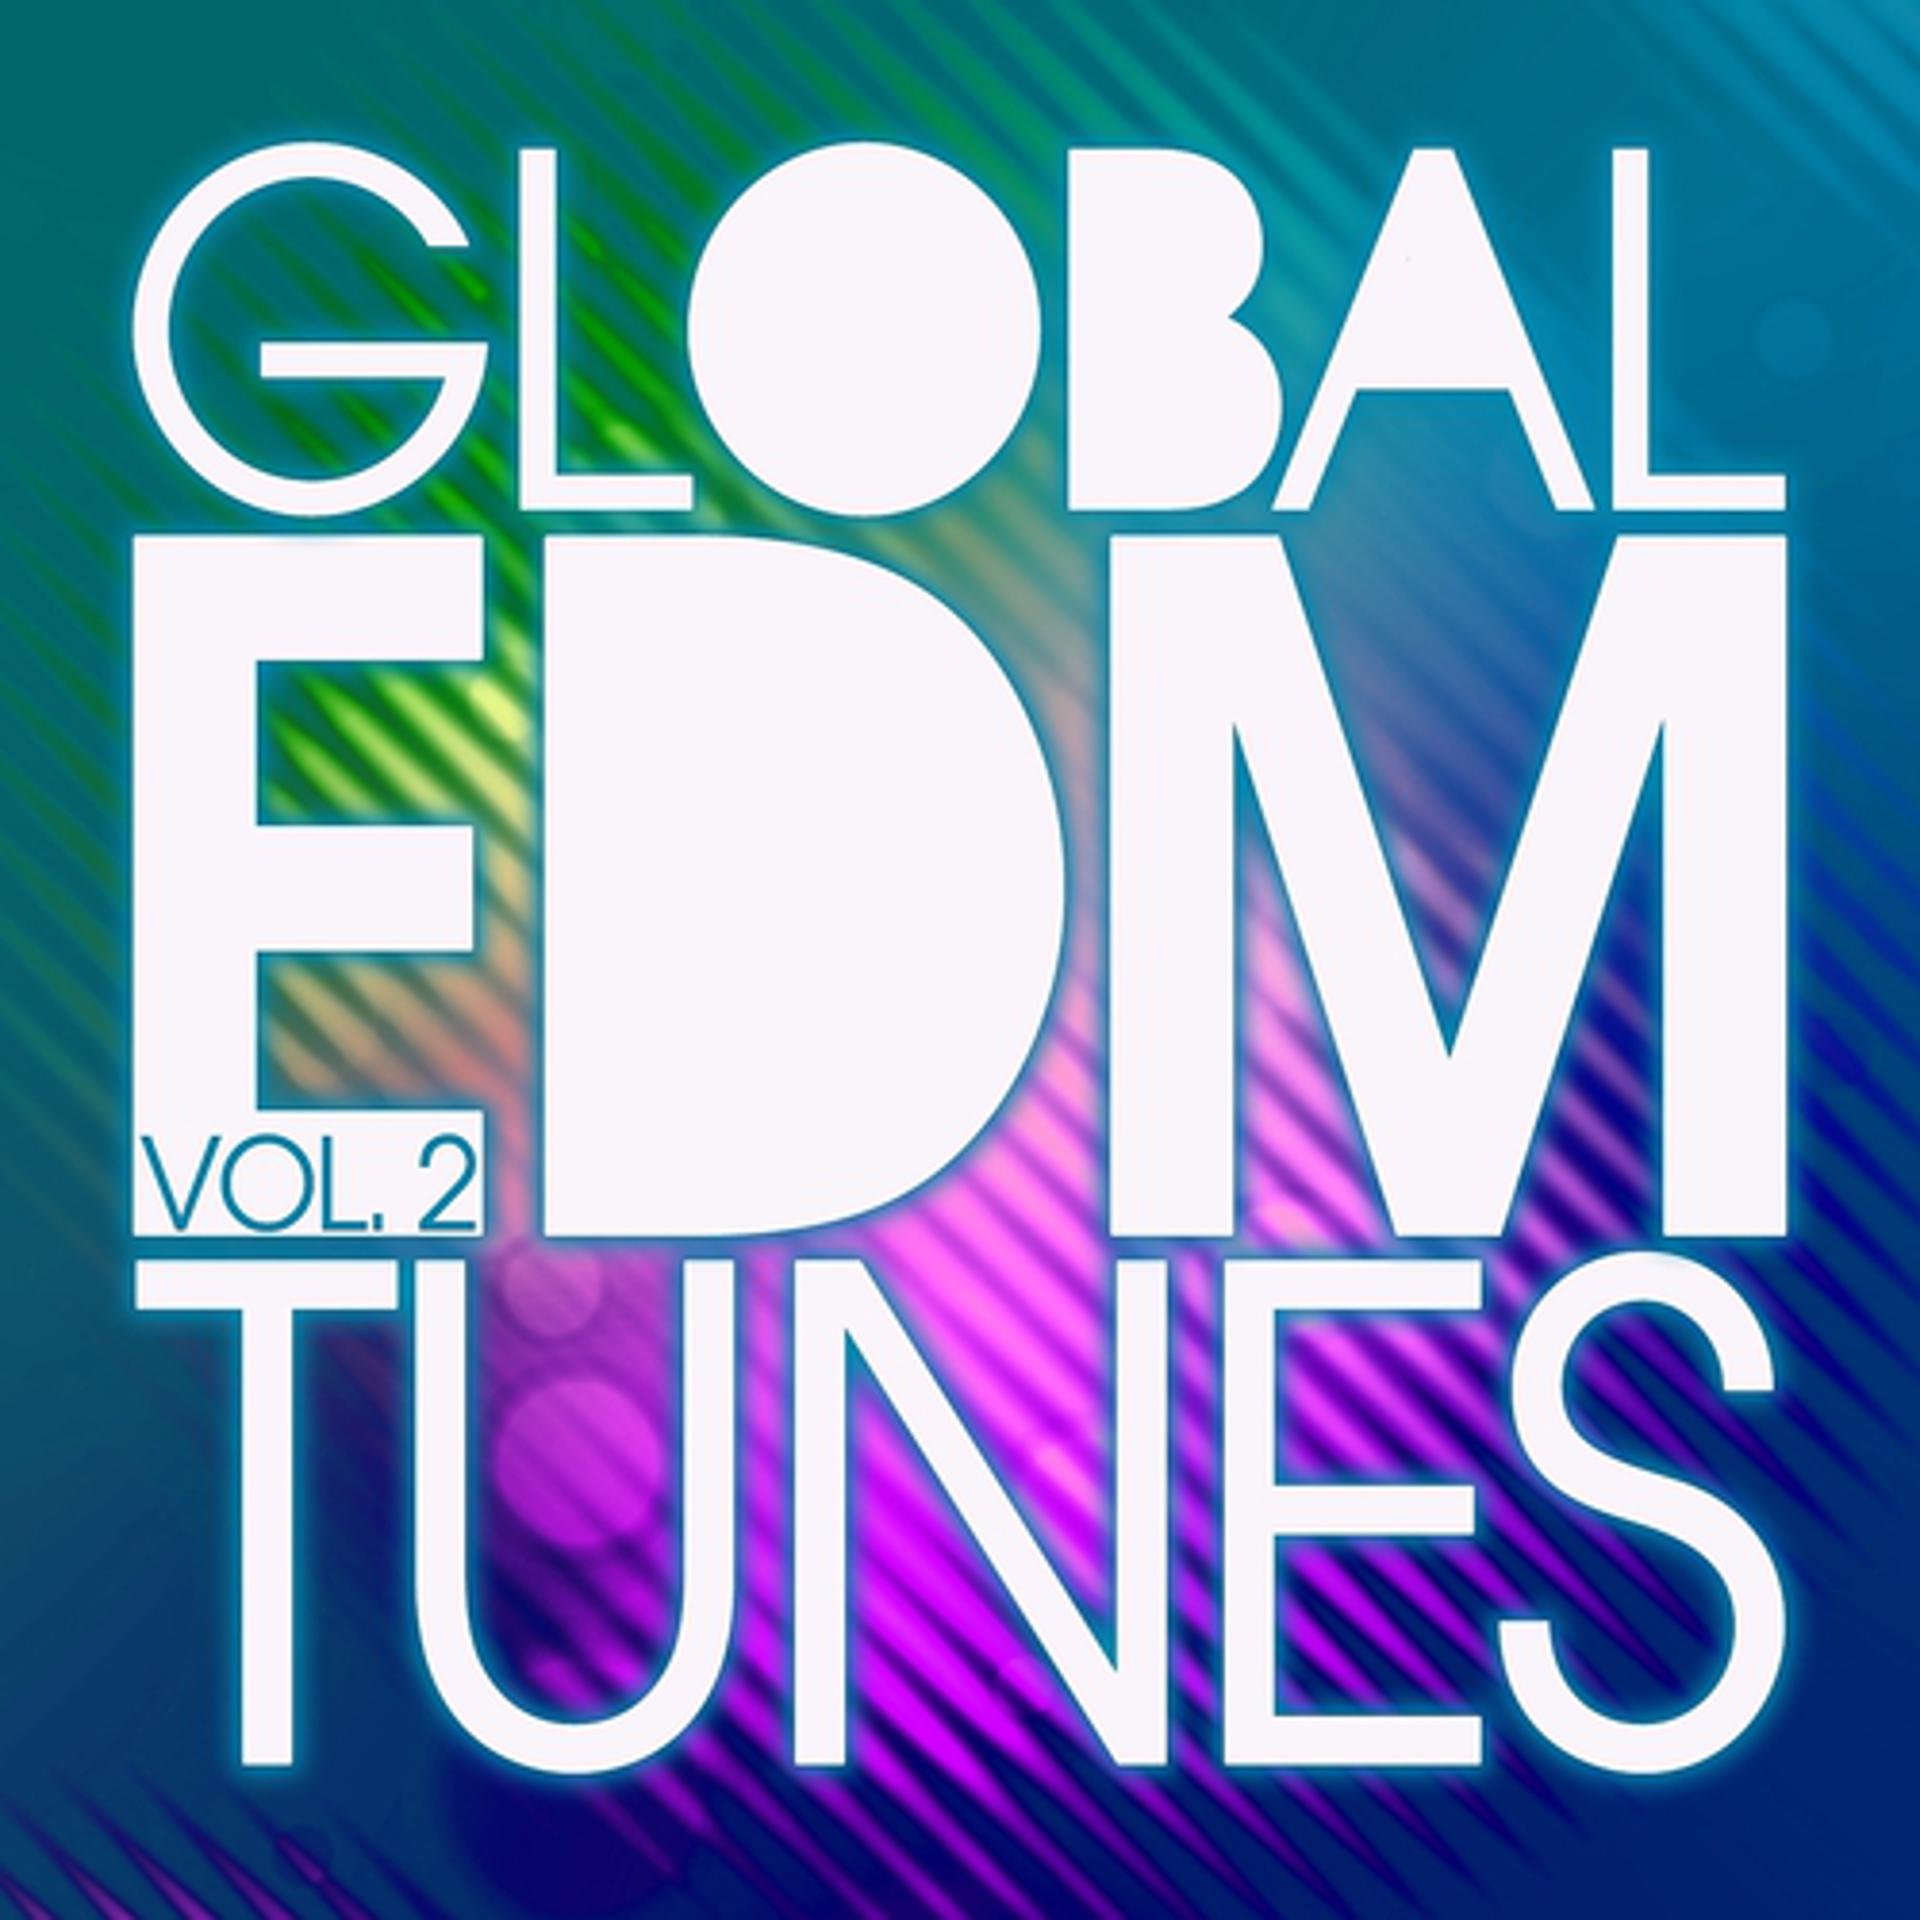 Постер альбома Global EDM Tunes, Vol. 2